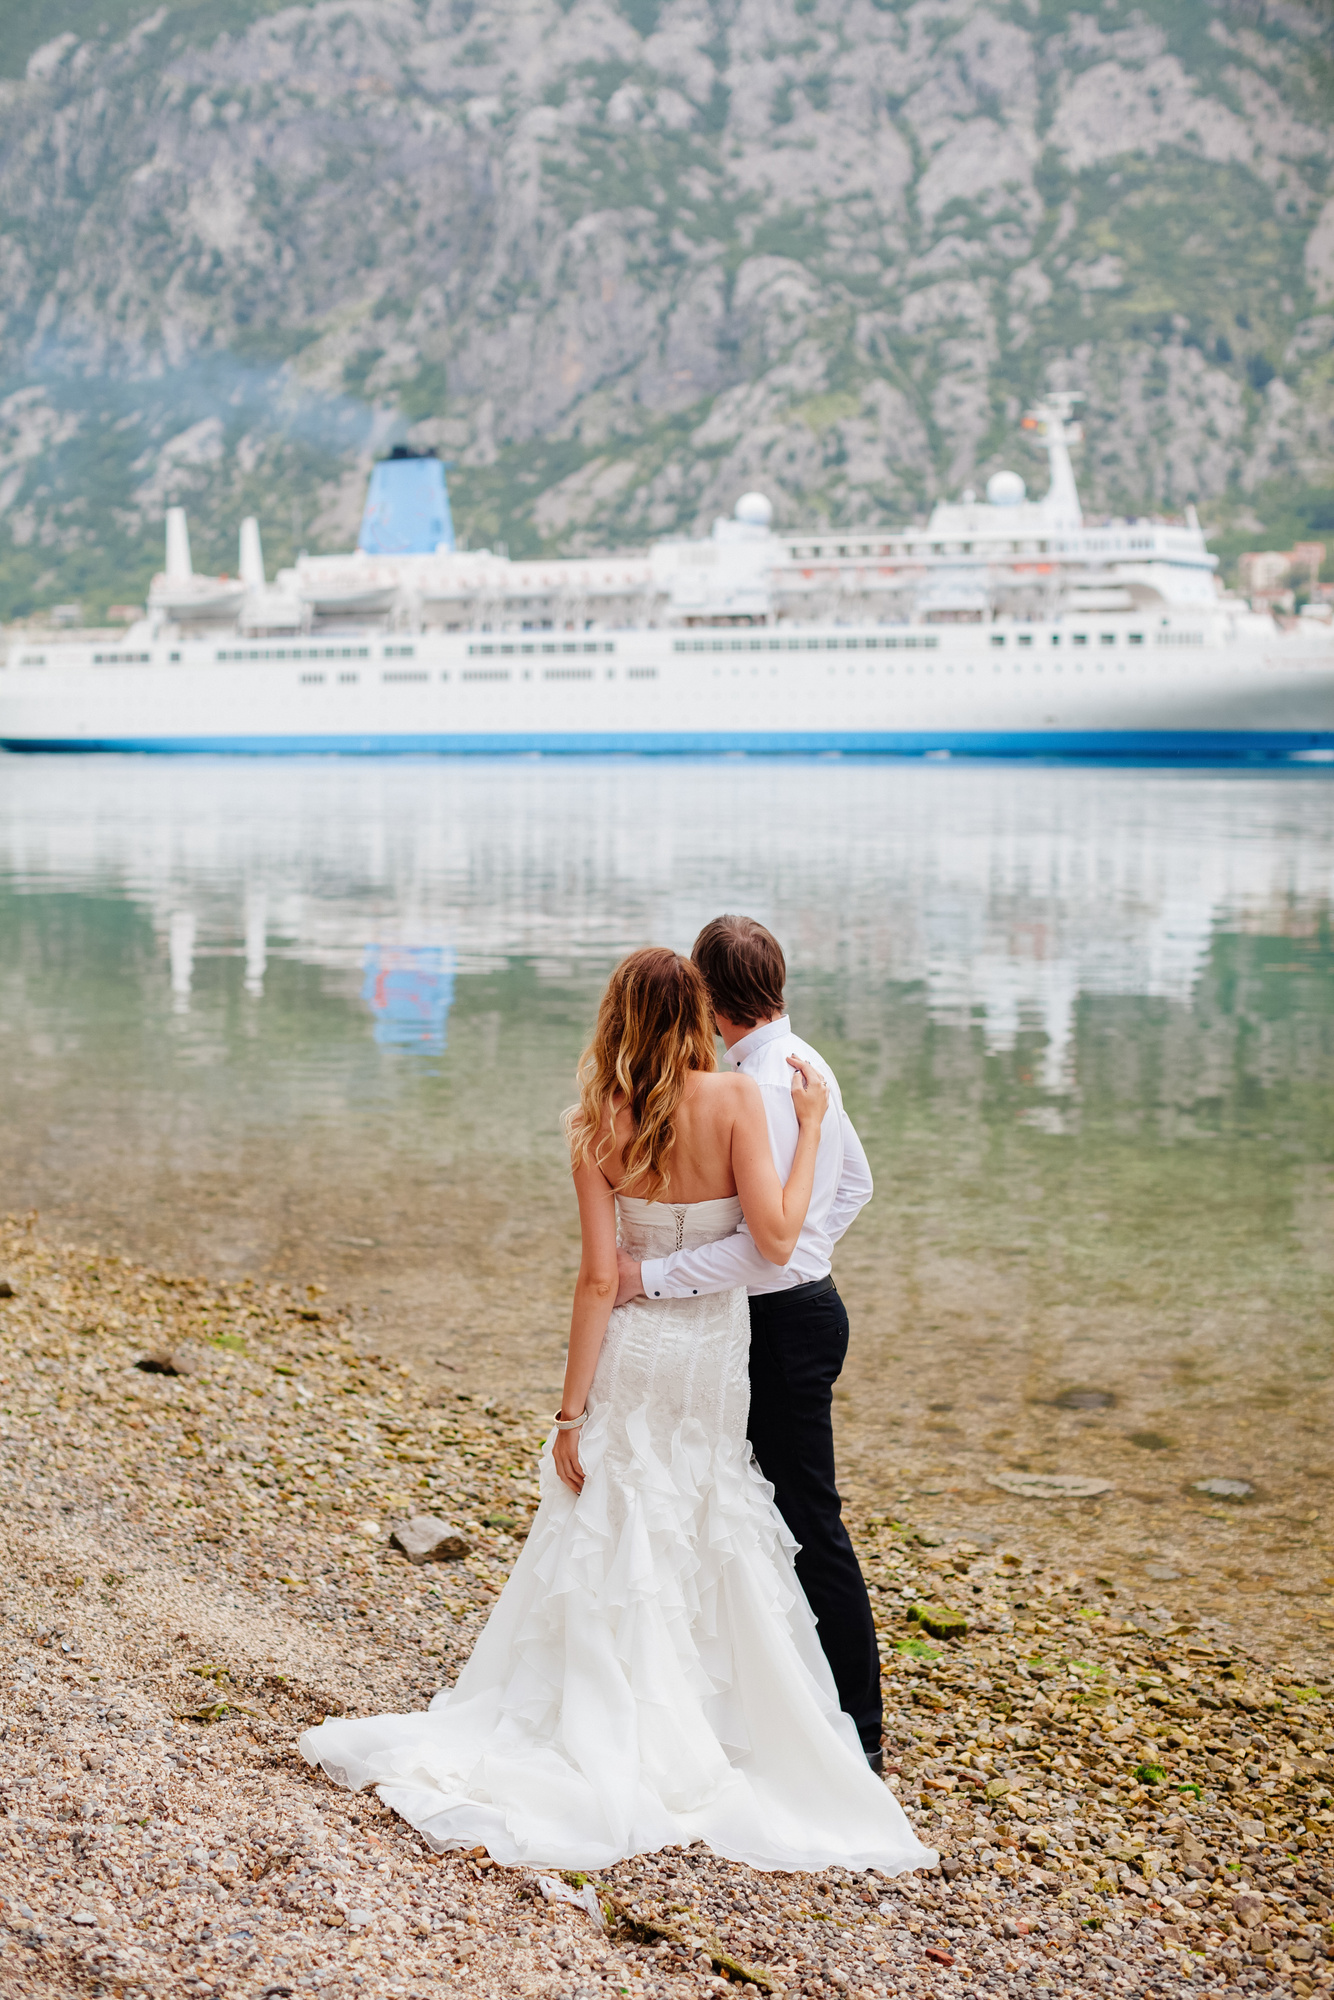 Honeymoon Wedding Couple Travel Cruise Ship